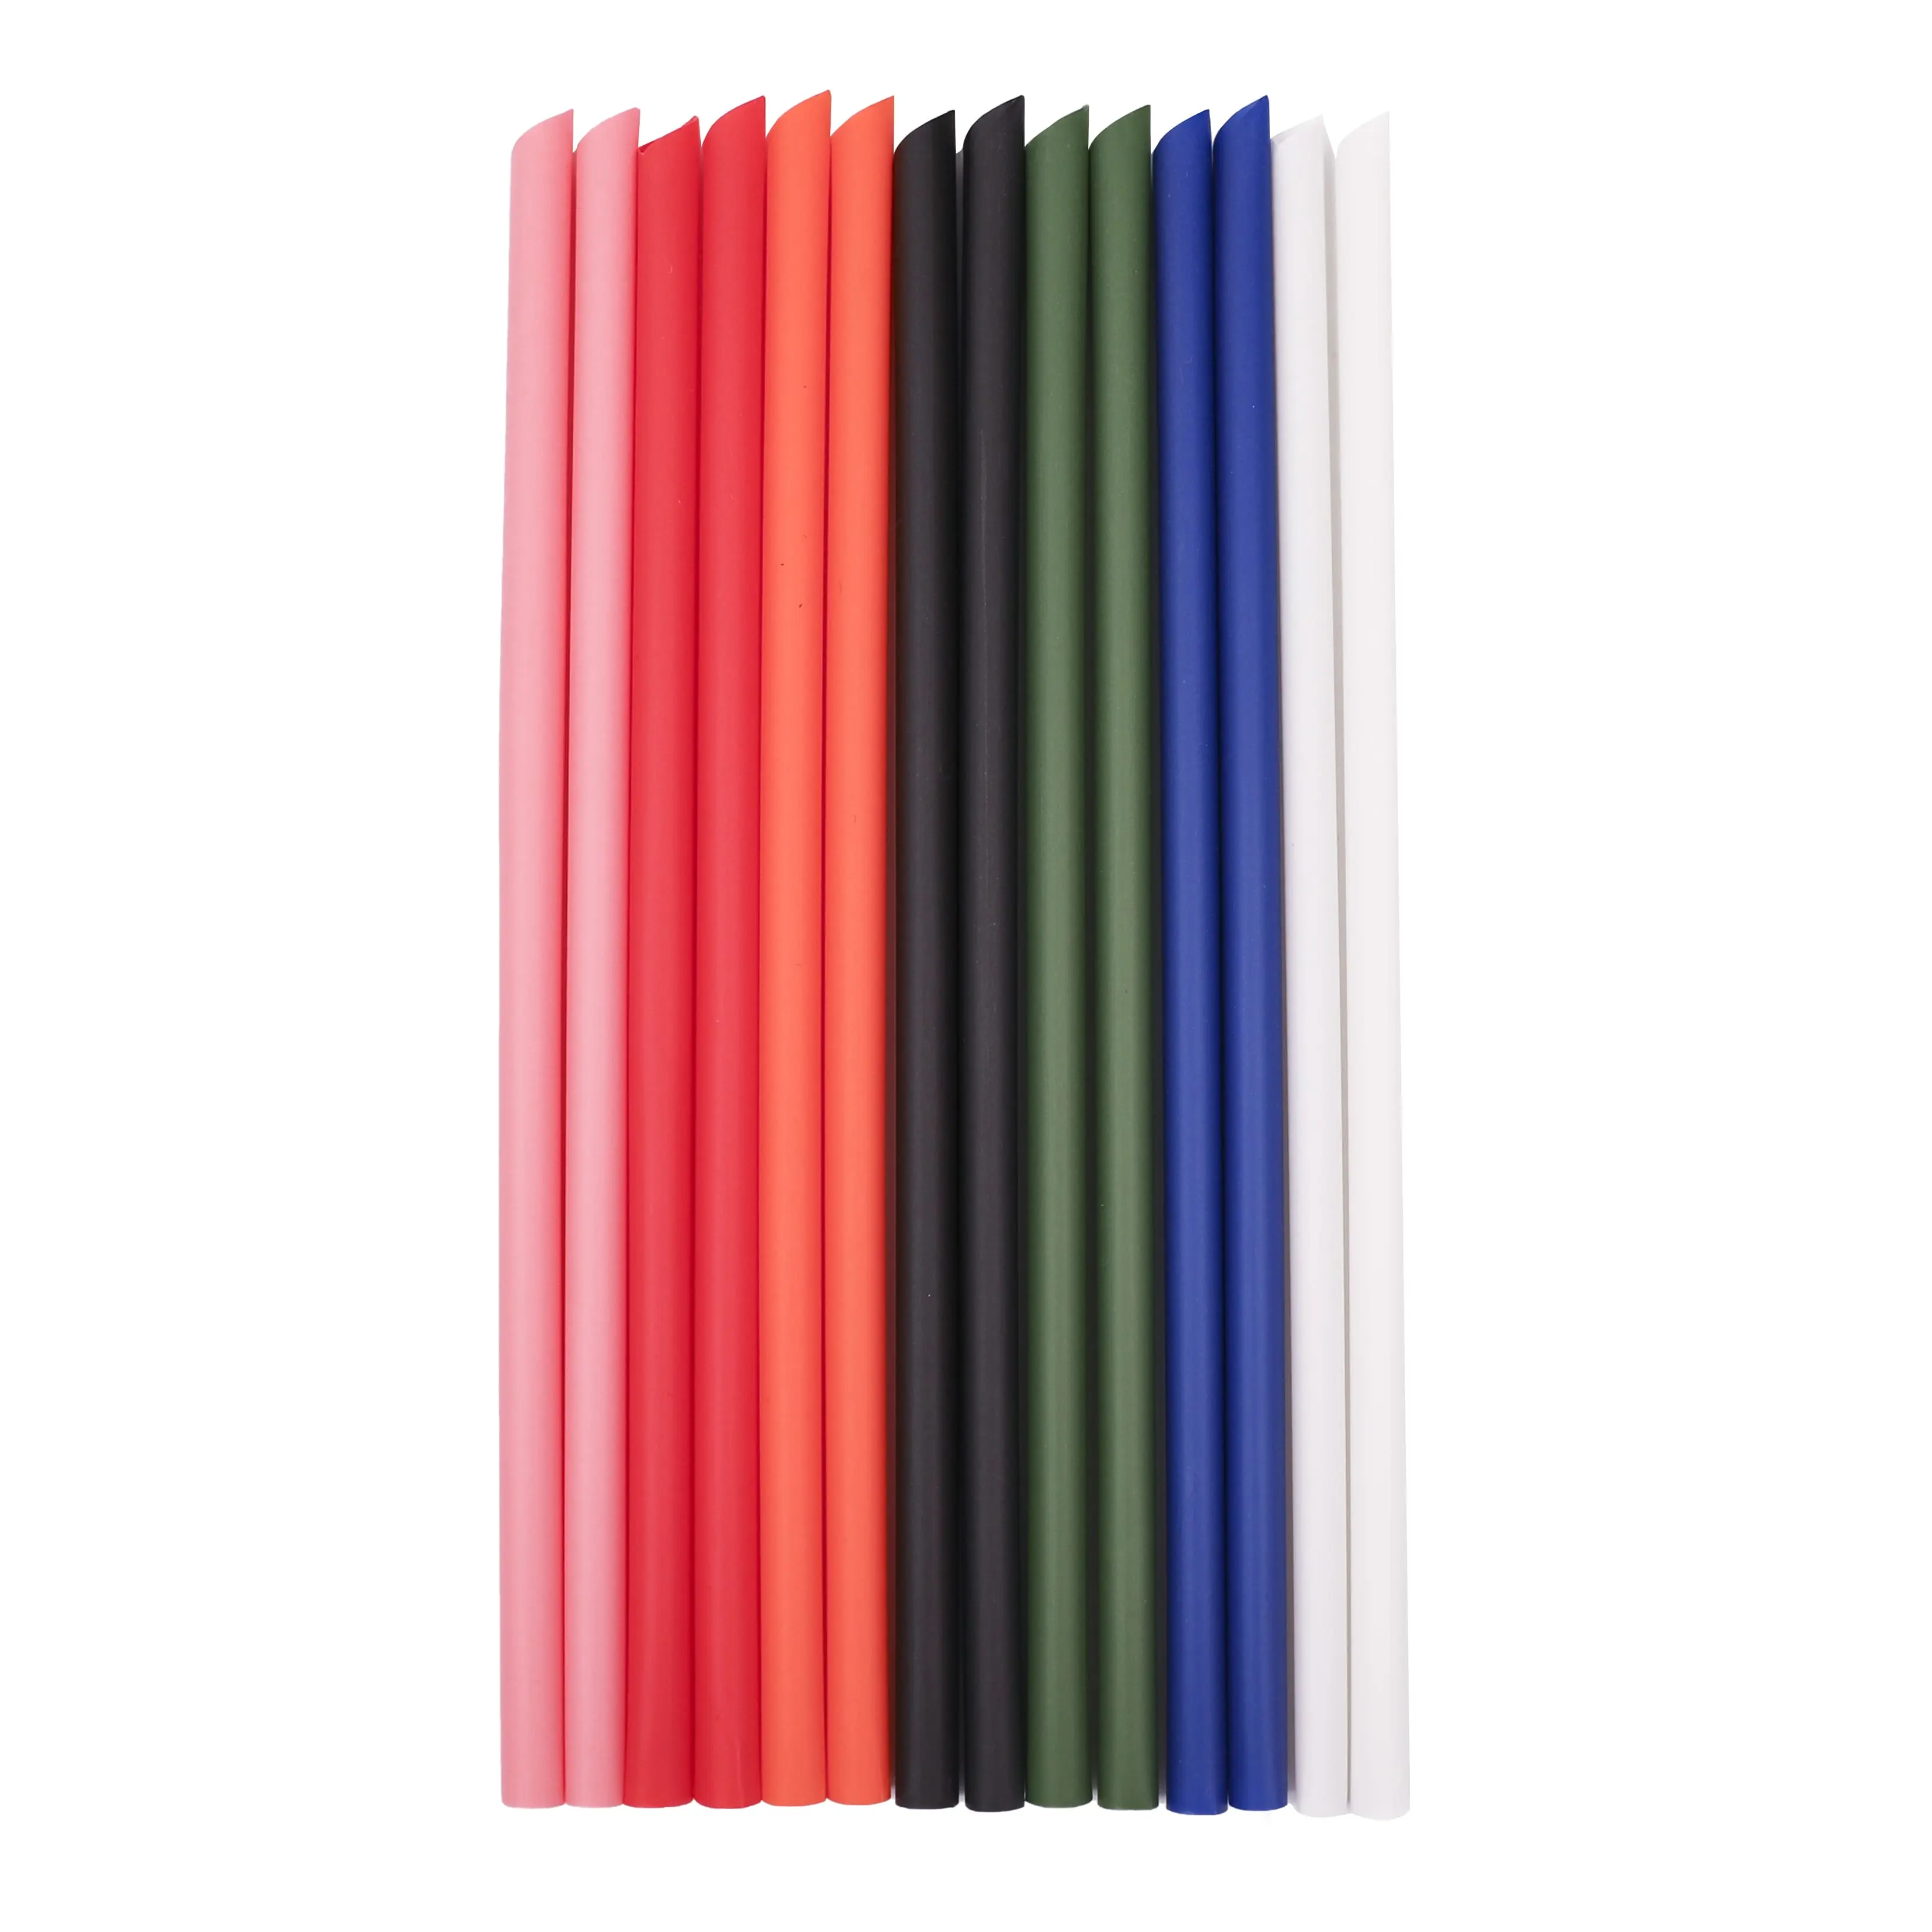 How Are PLA Straws Made?